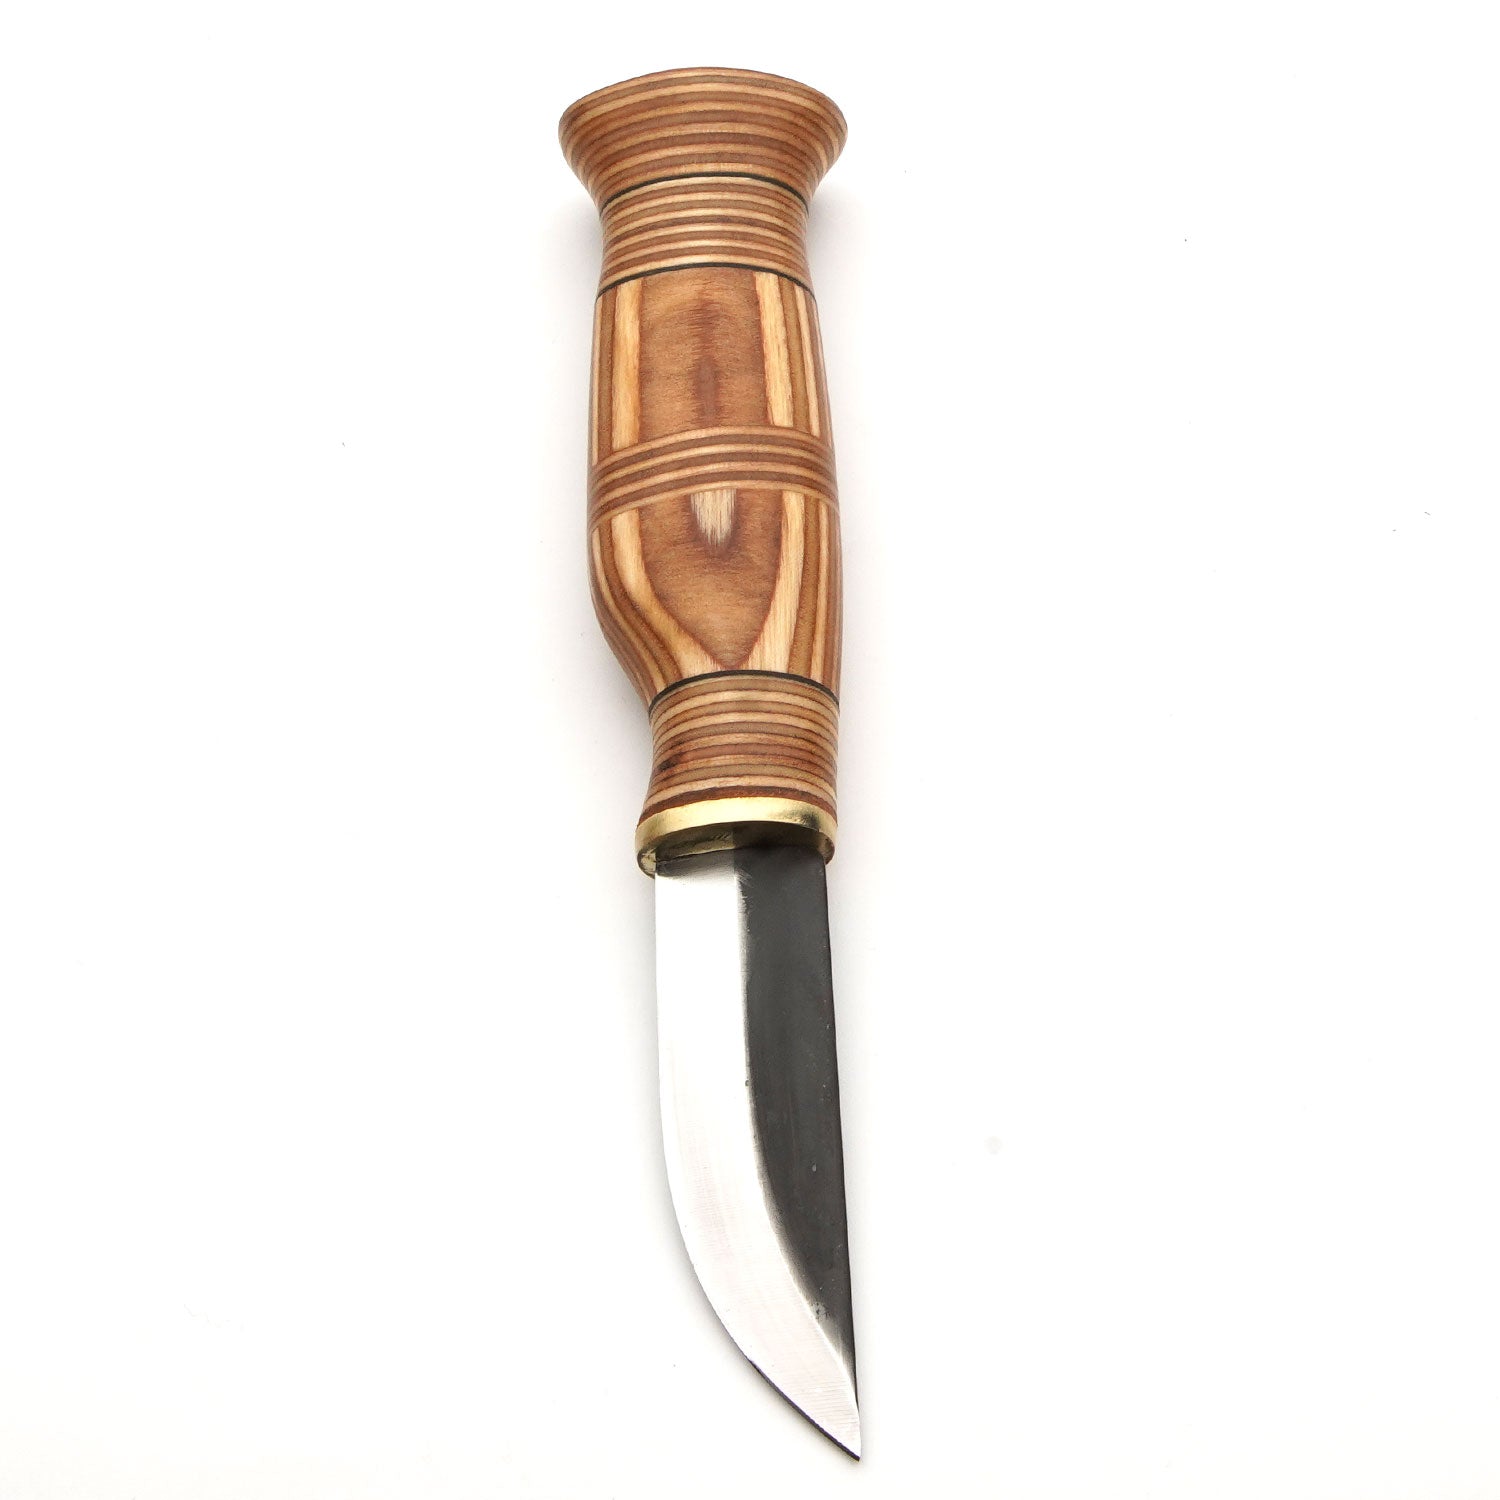 Morakniv Companion 14071 Dala Red, fixed knife